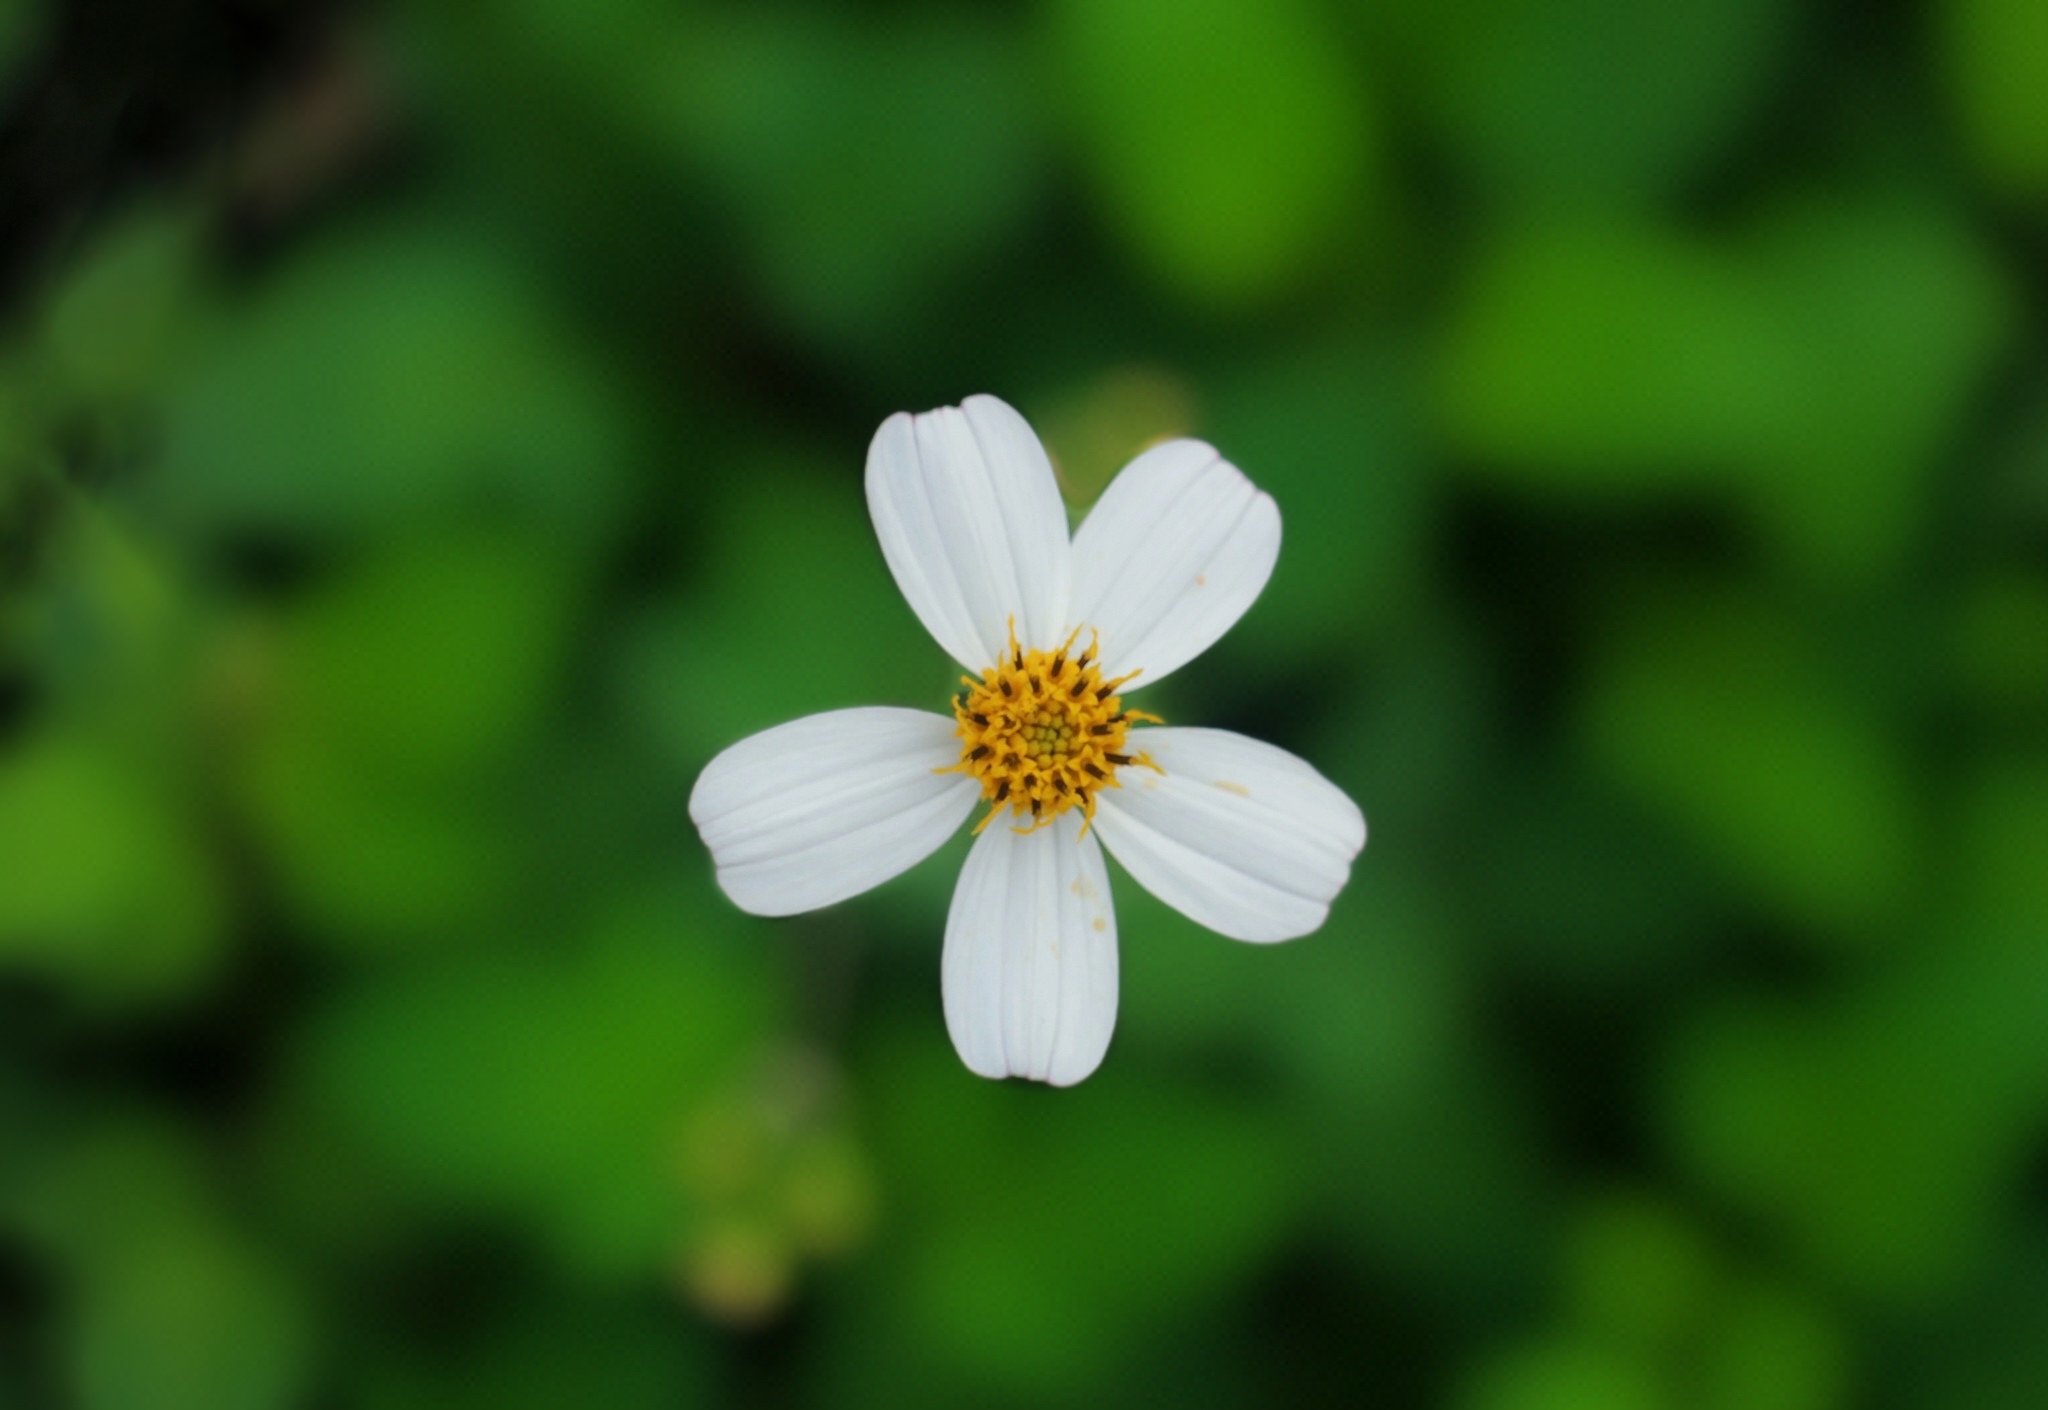 A white flower